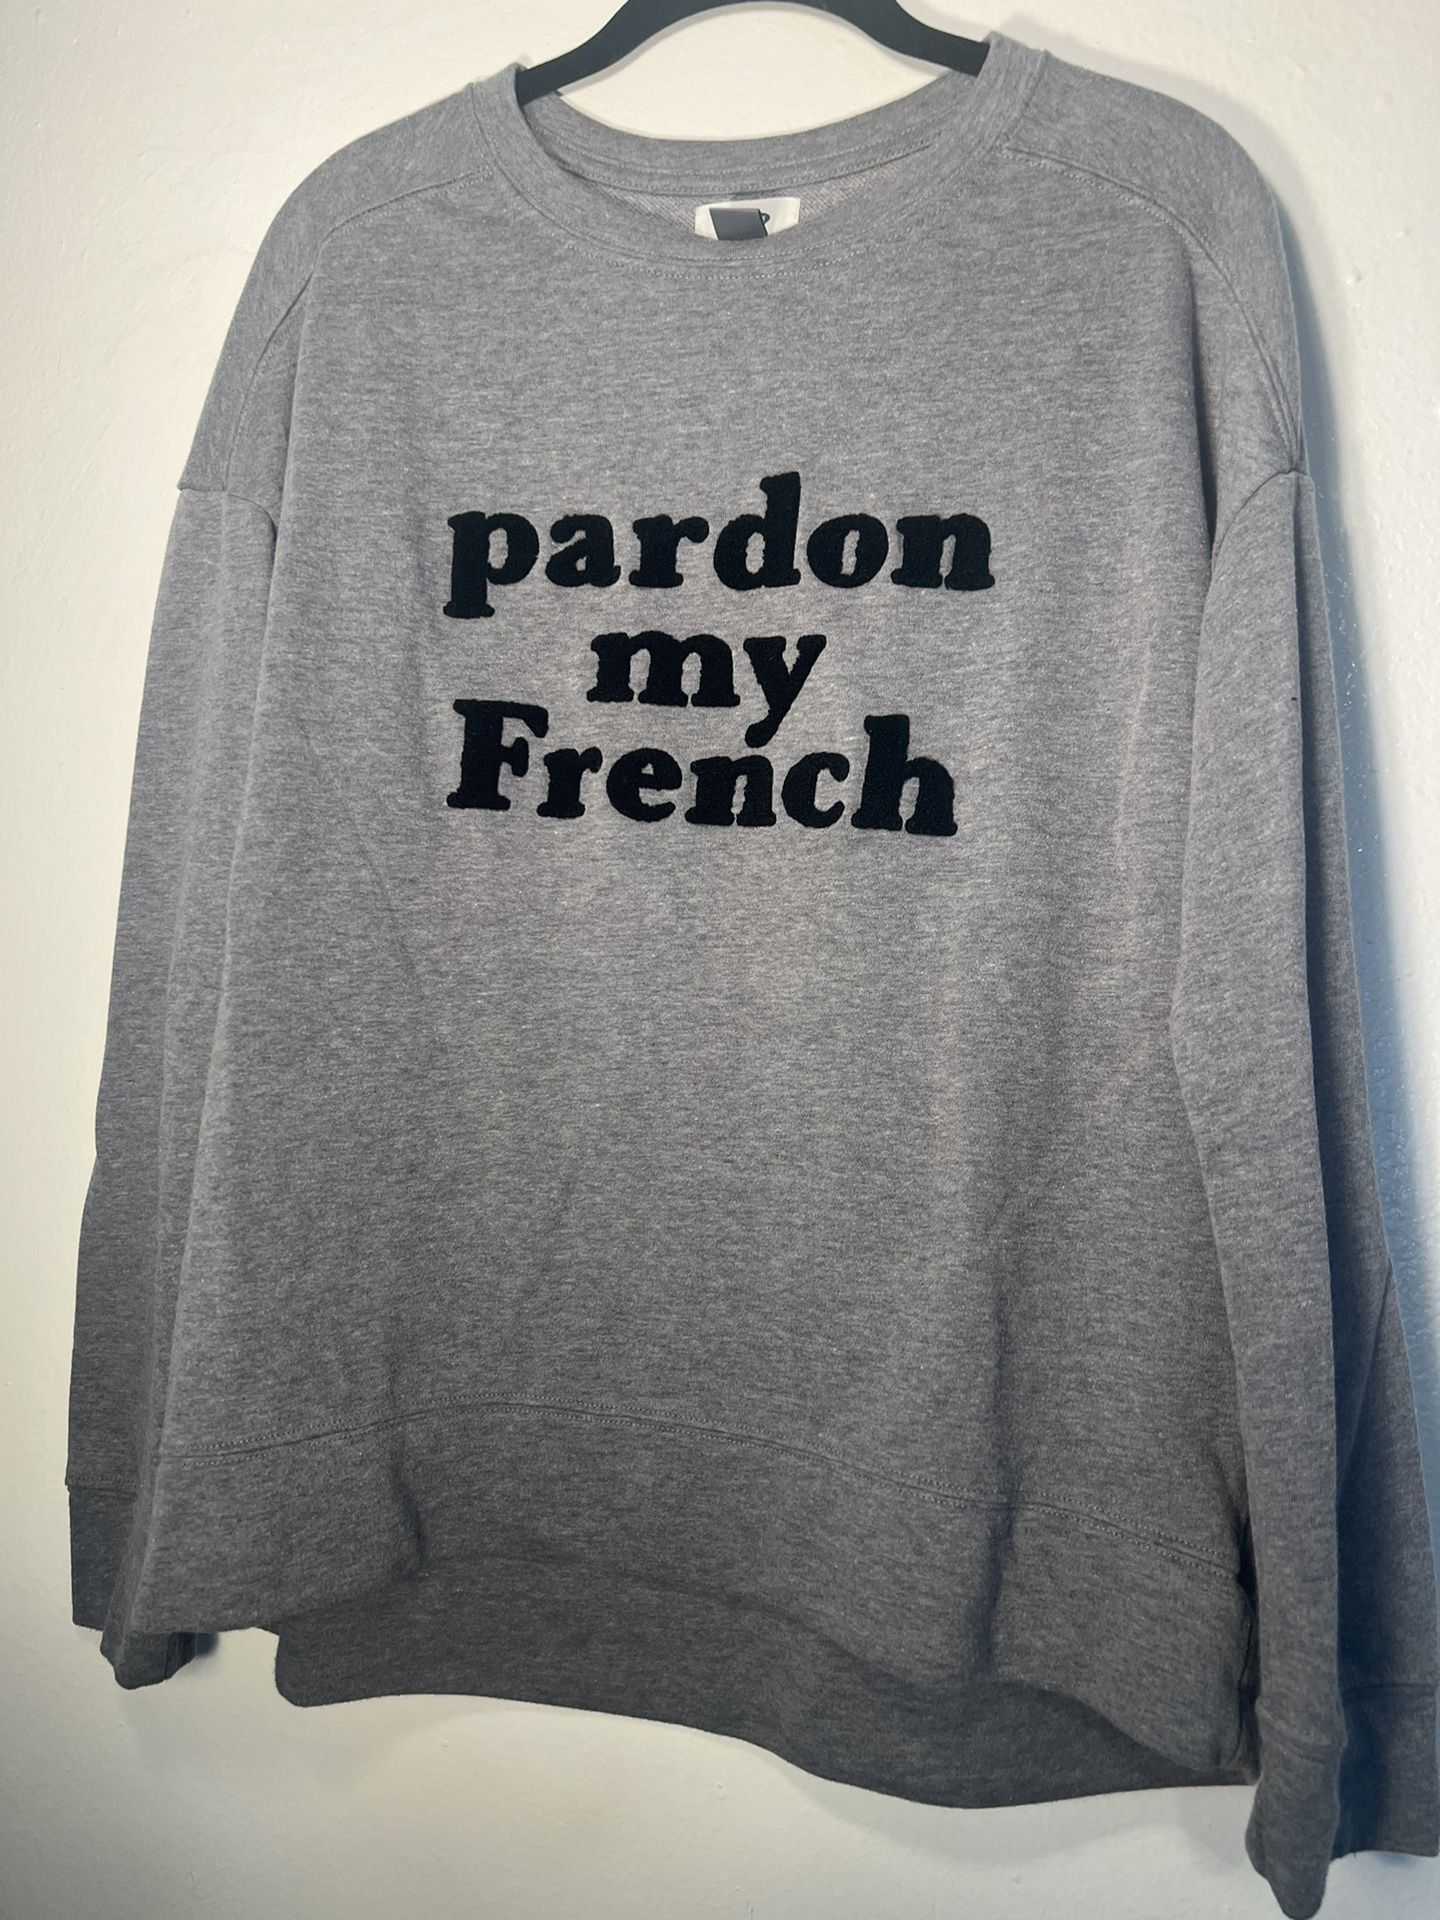 OLD NAVY Pardon My French Sweatshirt size M